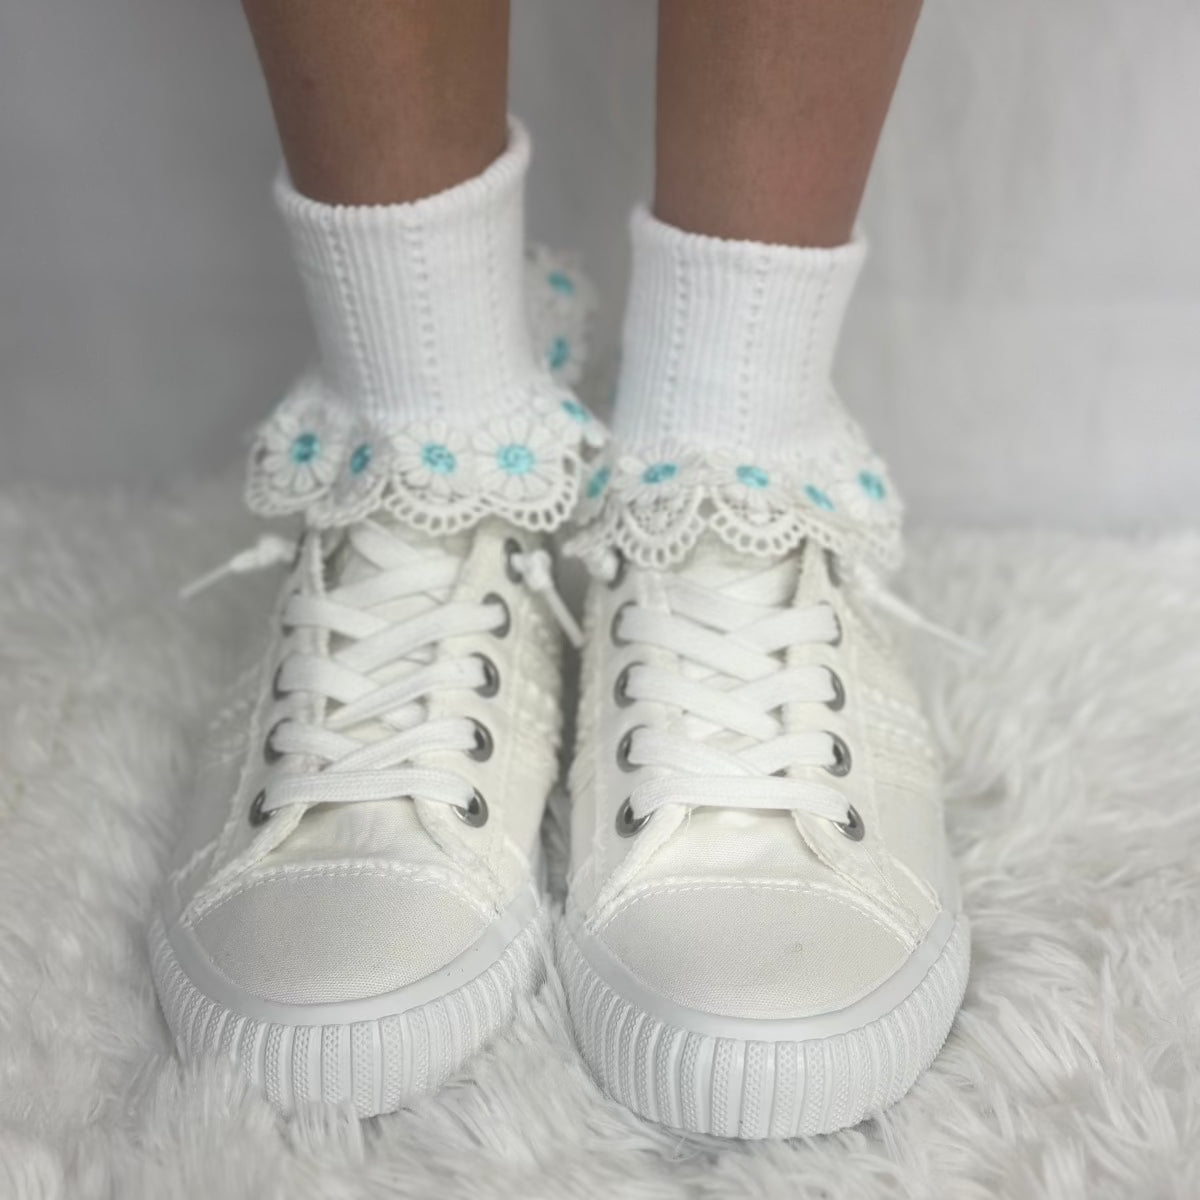 DAISY MAE  lace cuff socks - white aqua